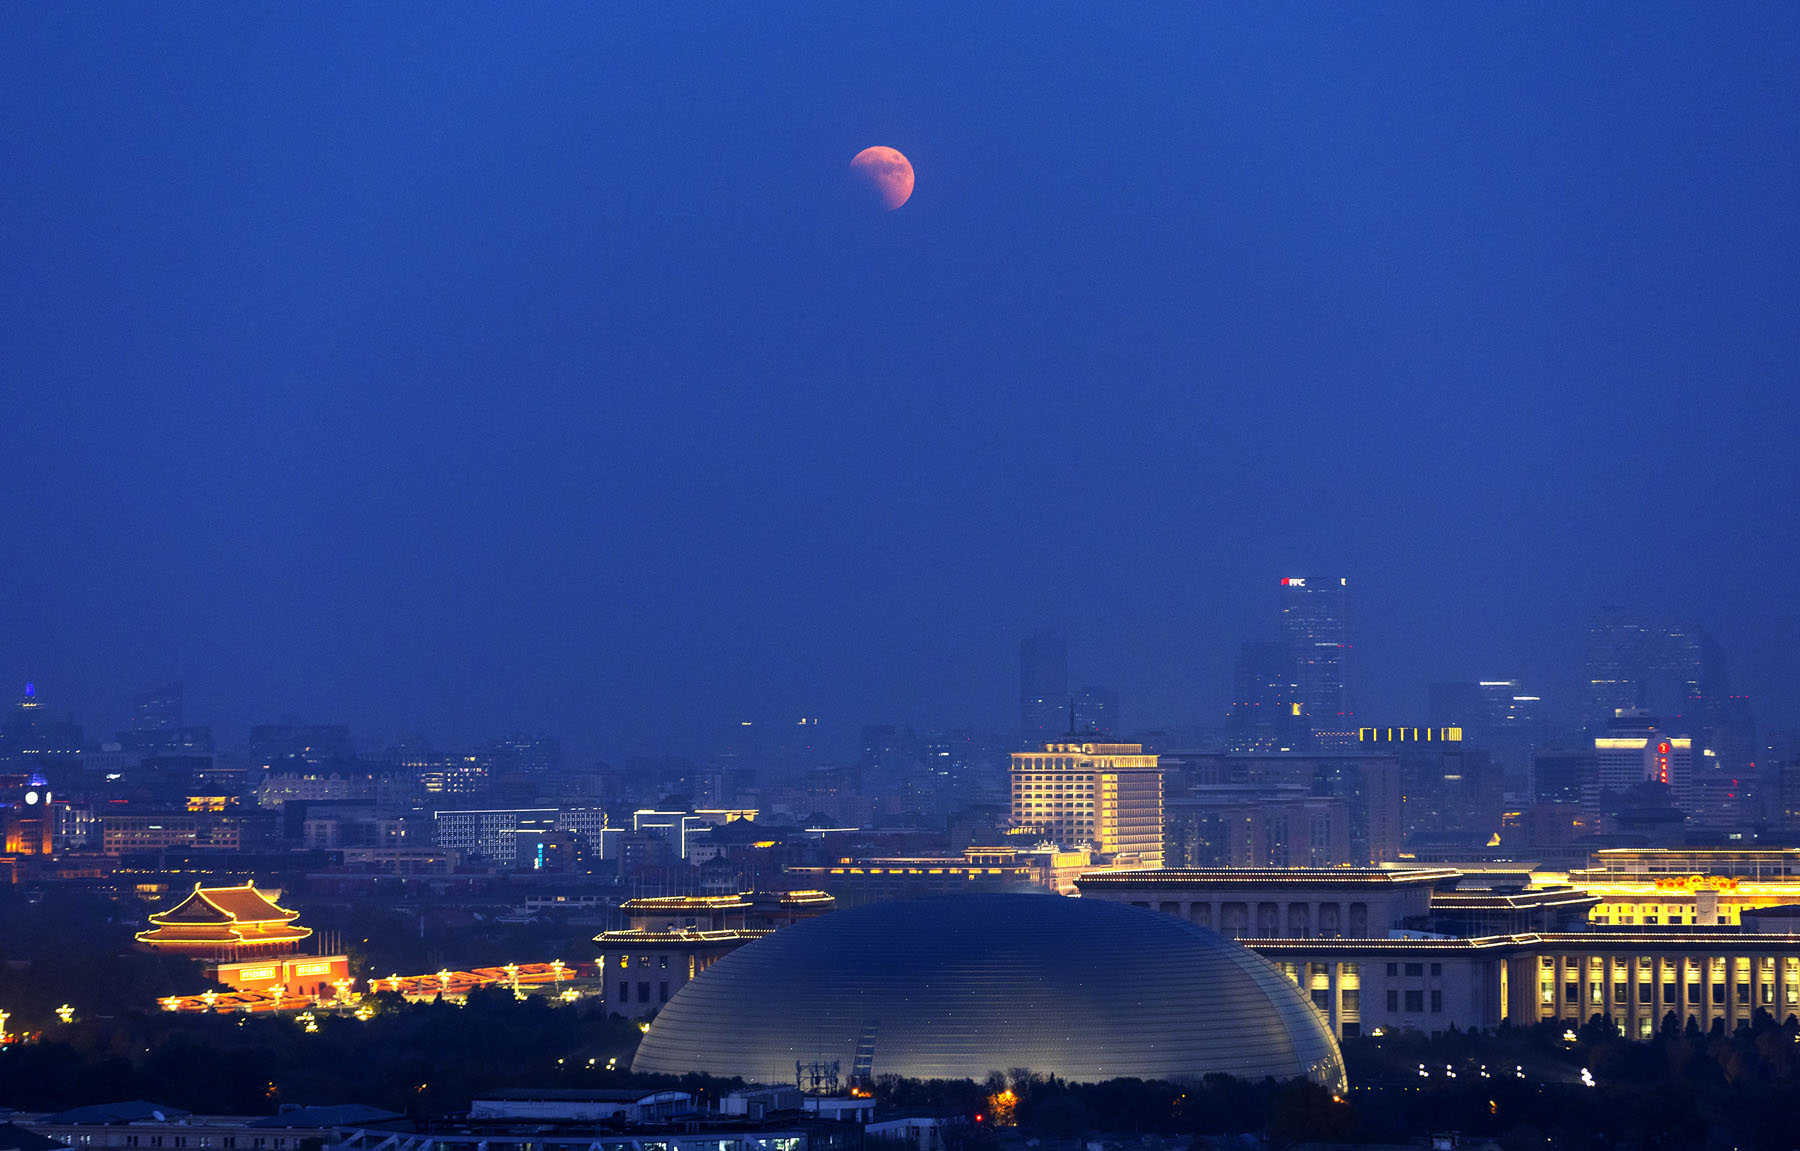 (221108) -- BEIJING, Nov. 8, 2022 (Xinhua) -- The moon is seen during a total lunar eclipse in Beijing, capital of China, Nov. 8, 2022. (Xinhua/Fei Maohua)